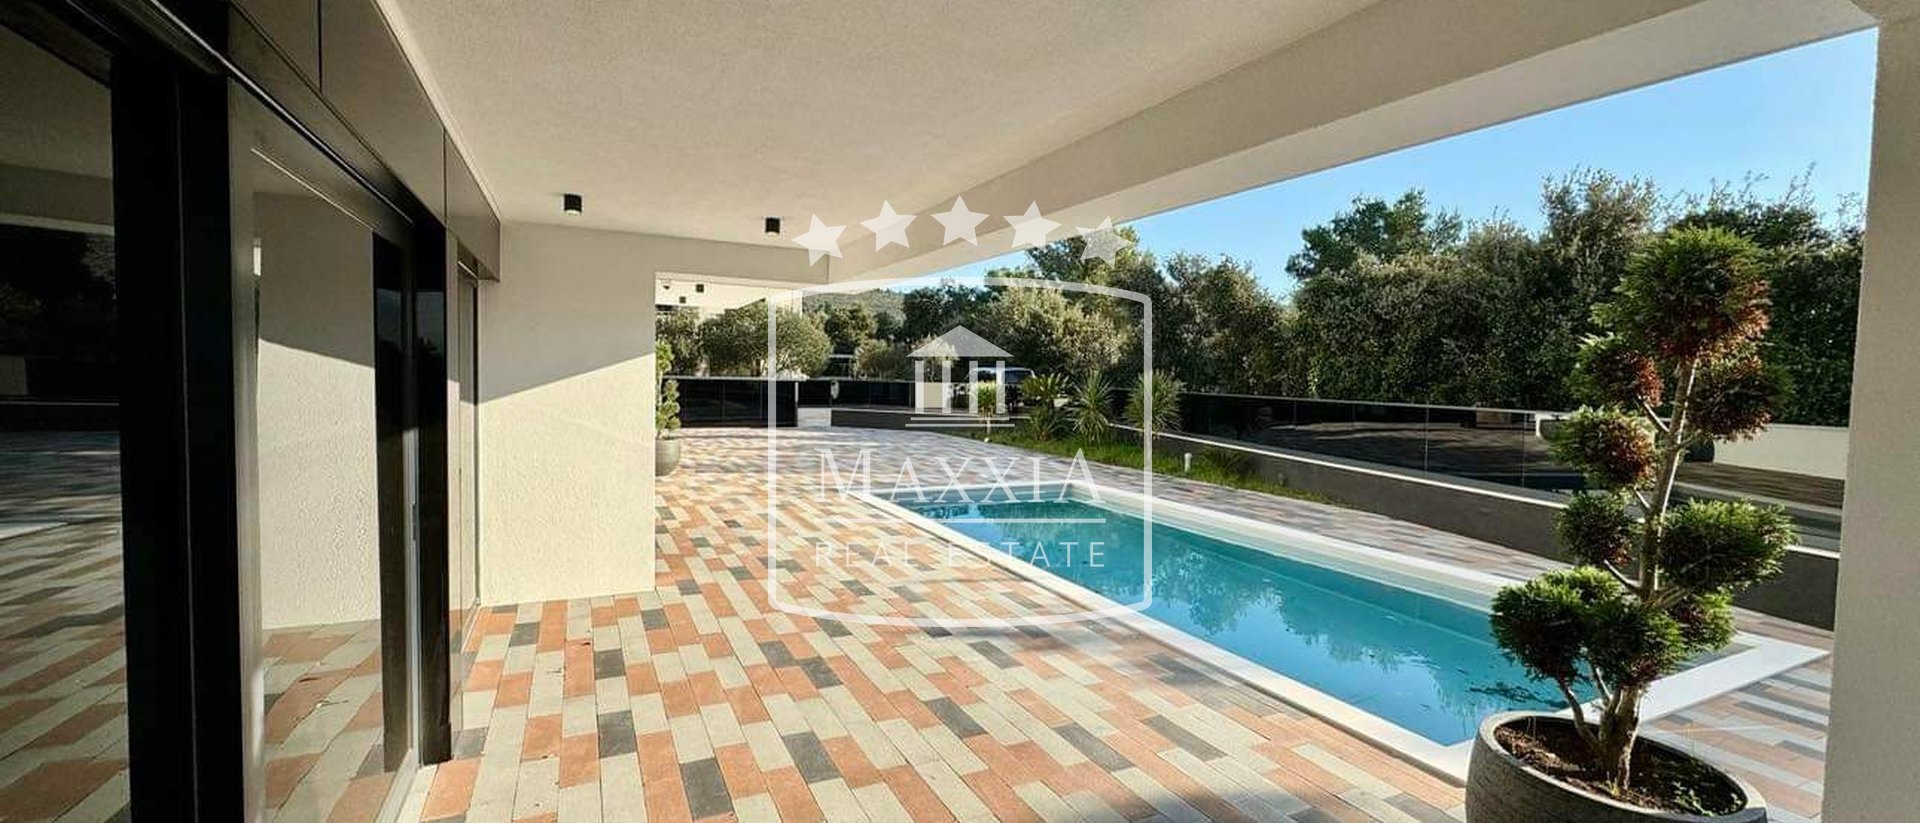 Sukošan - new modern villa of 296m2 with a pool! Sea view!